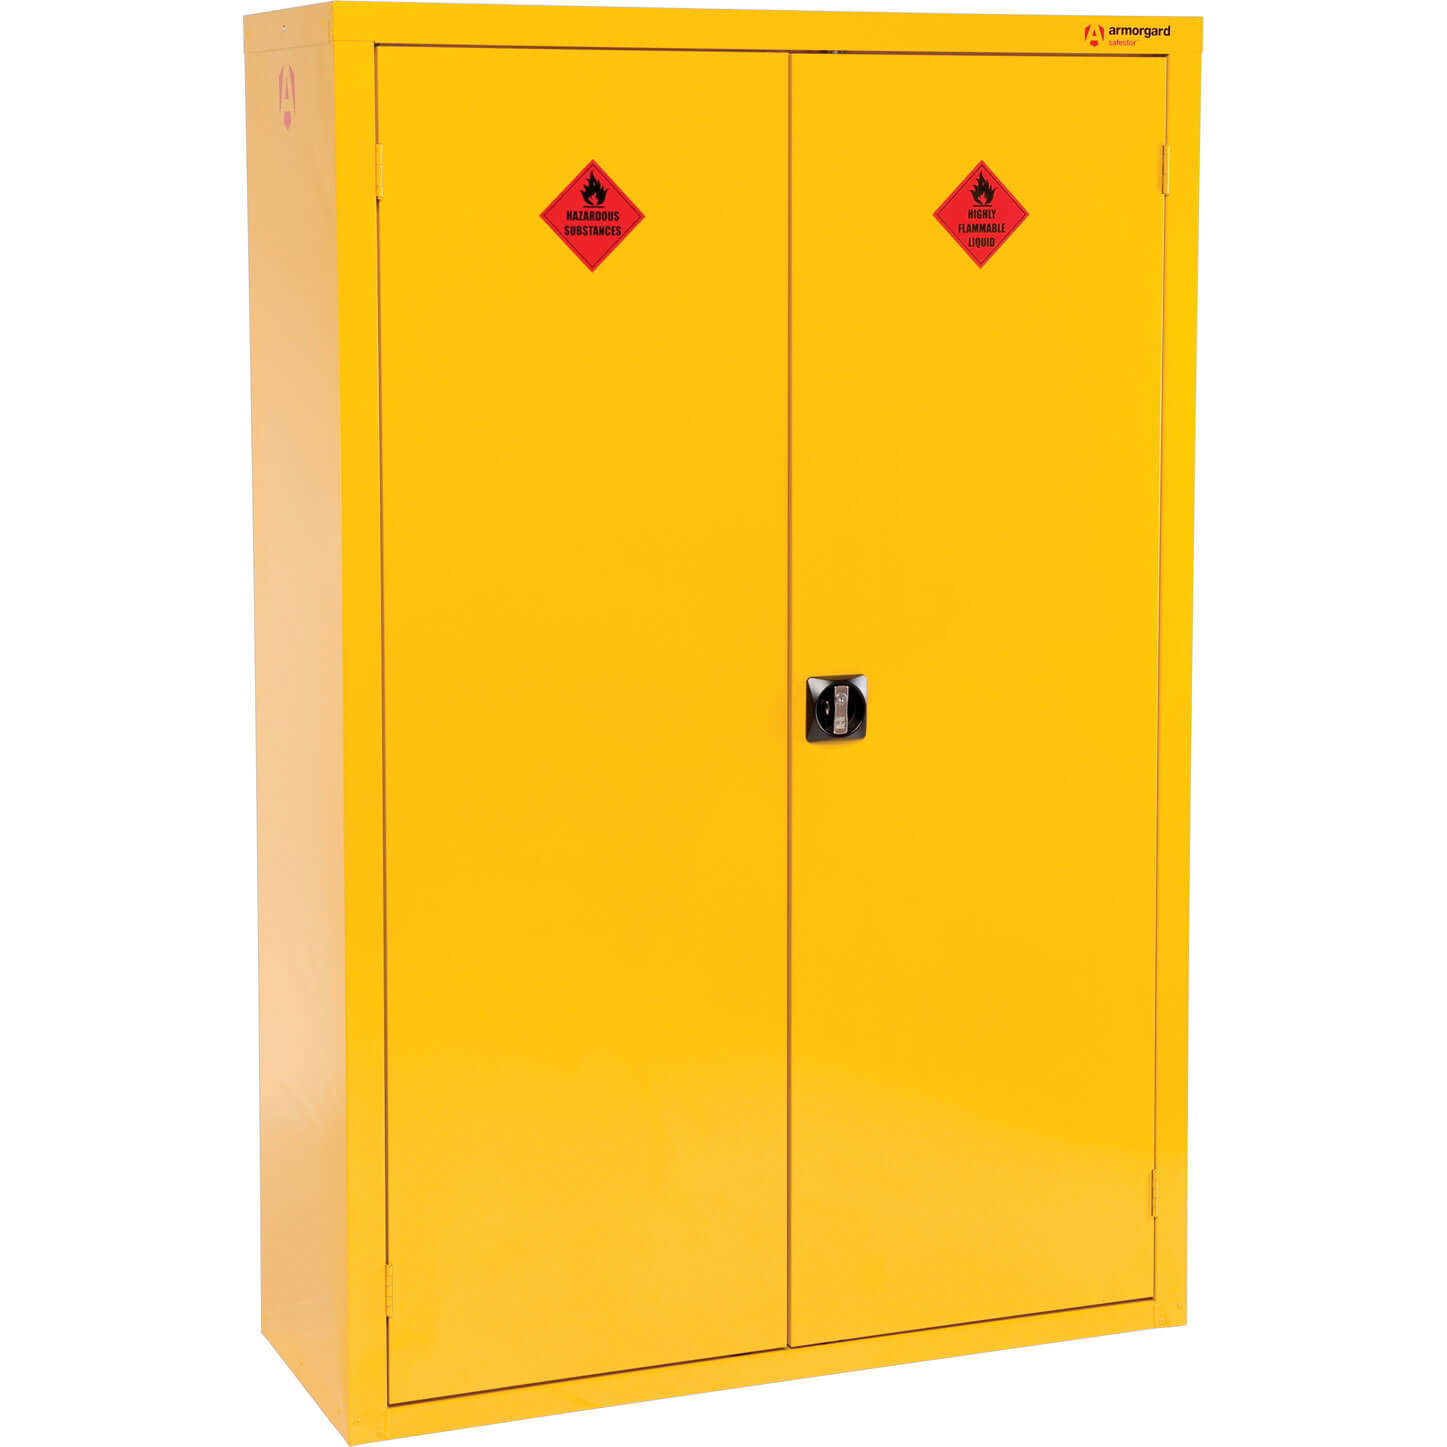 Image of Armorgard Safestor Hazardous Materials Secure Storage Cabinet 1200mm 465mm 1800mm